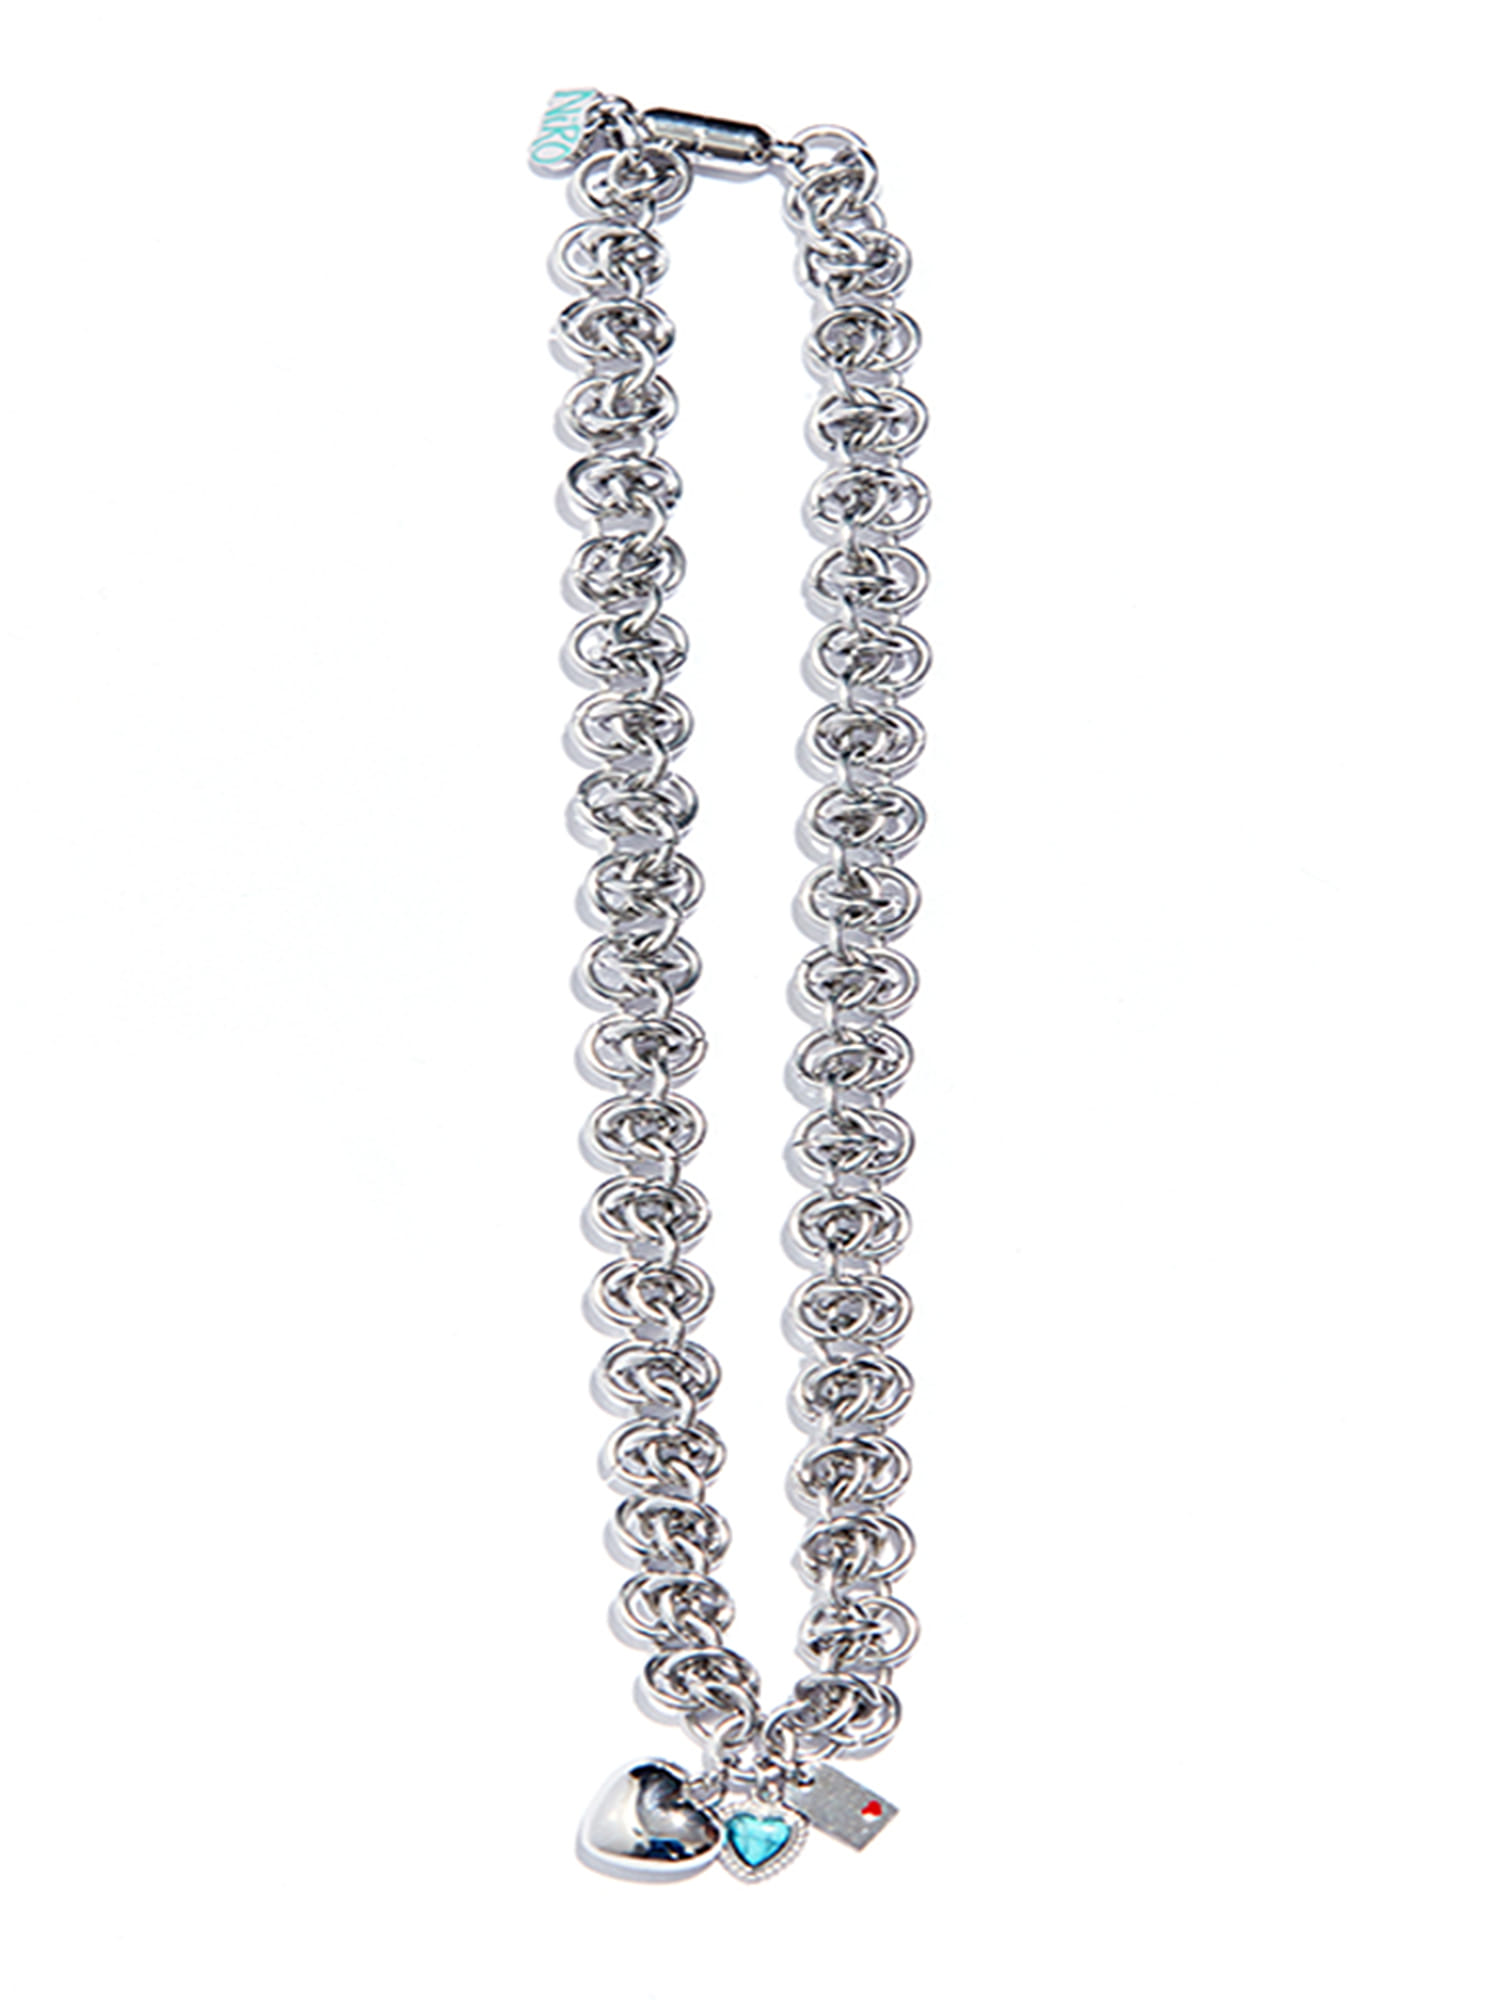 Triple Heart Byzantine Chain Necklace #90